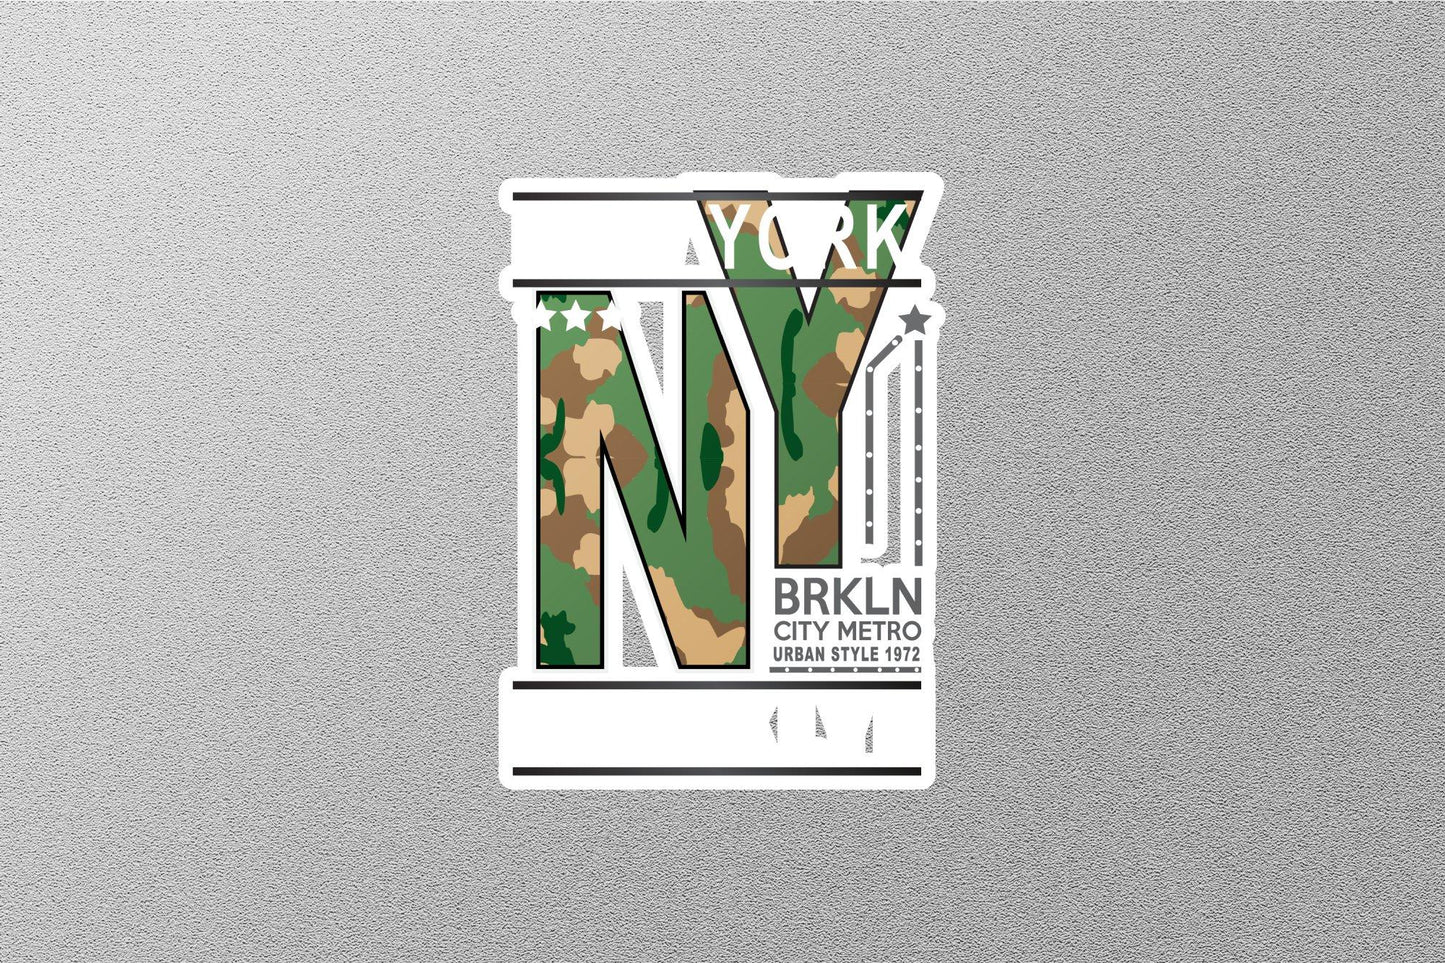 New York City Sticker